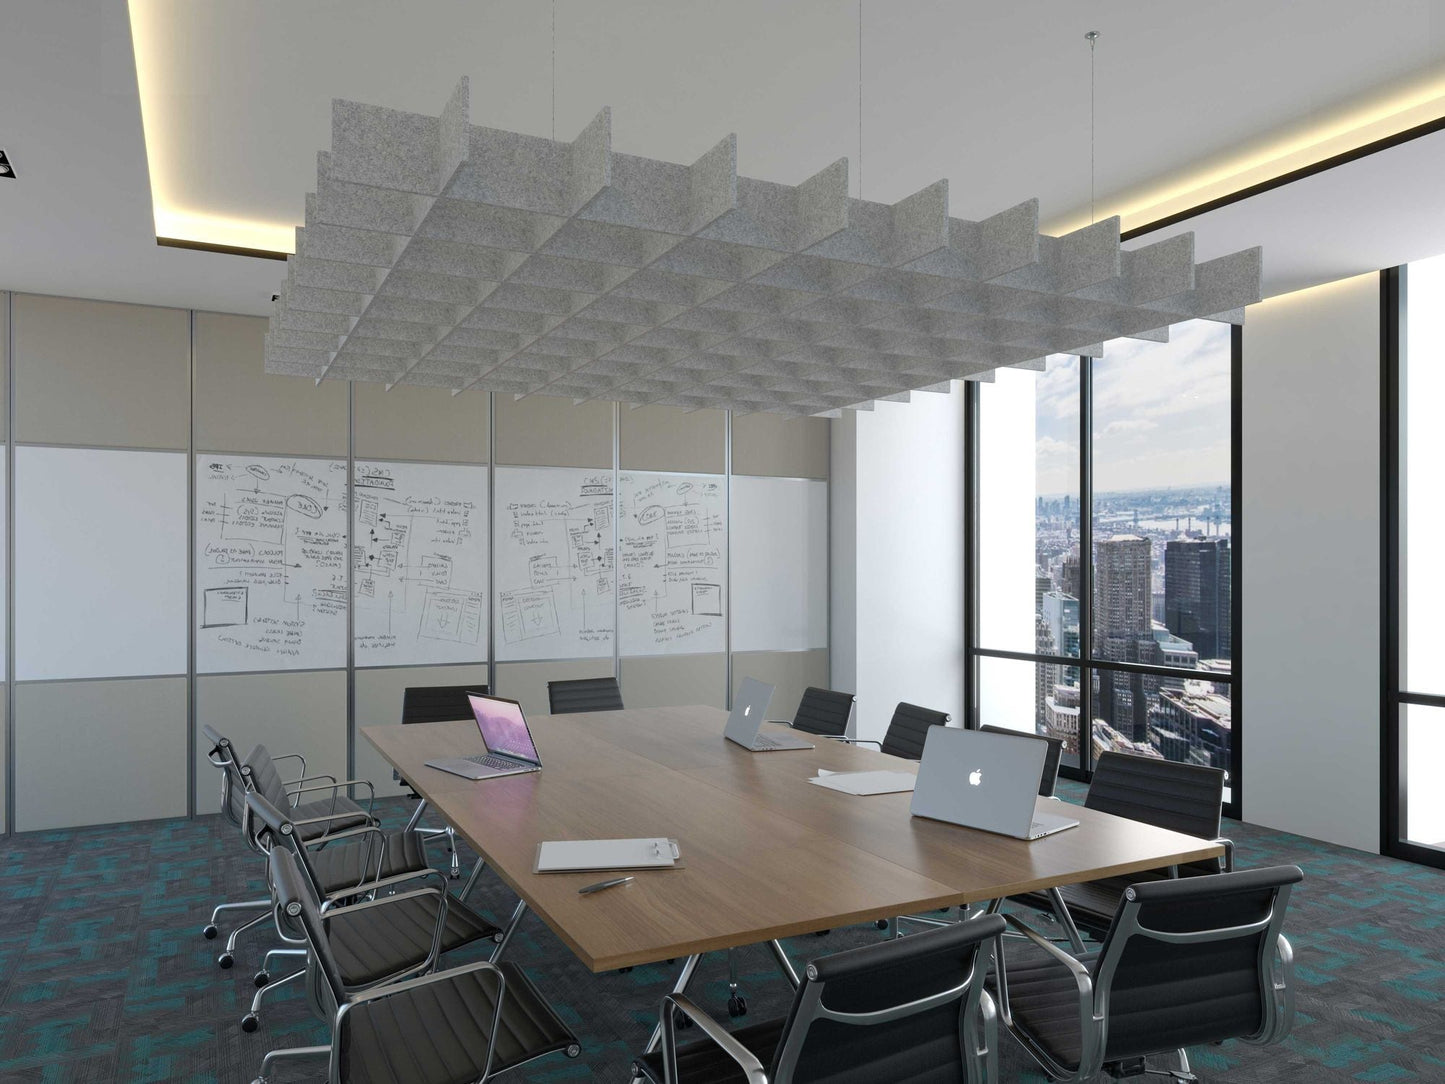 Acoustic felt ceiling clouds - grid 6" high - rectangle shape - room view render